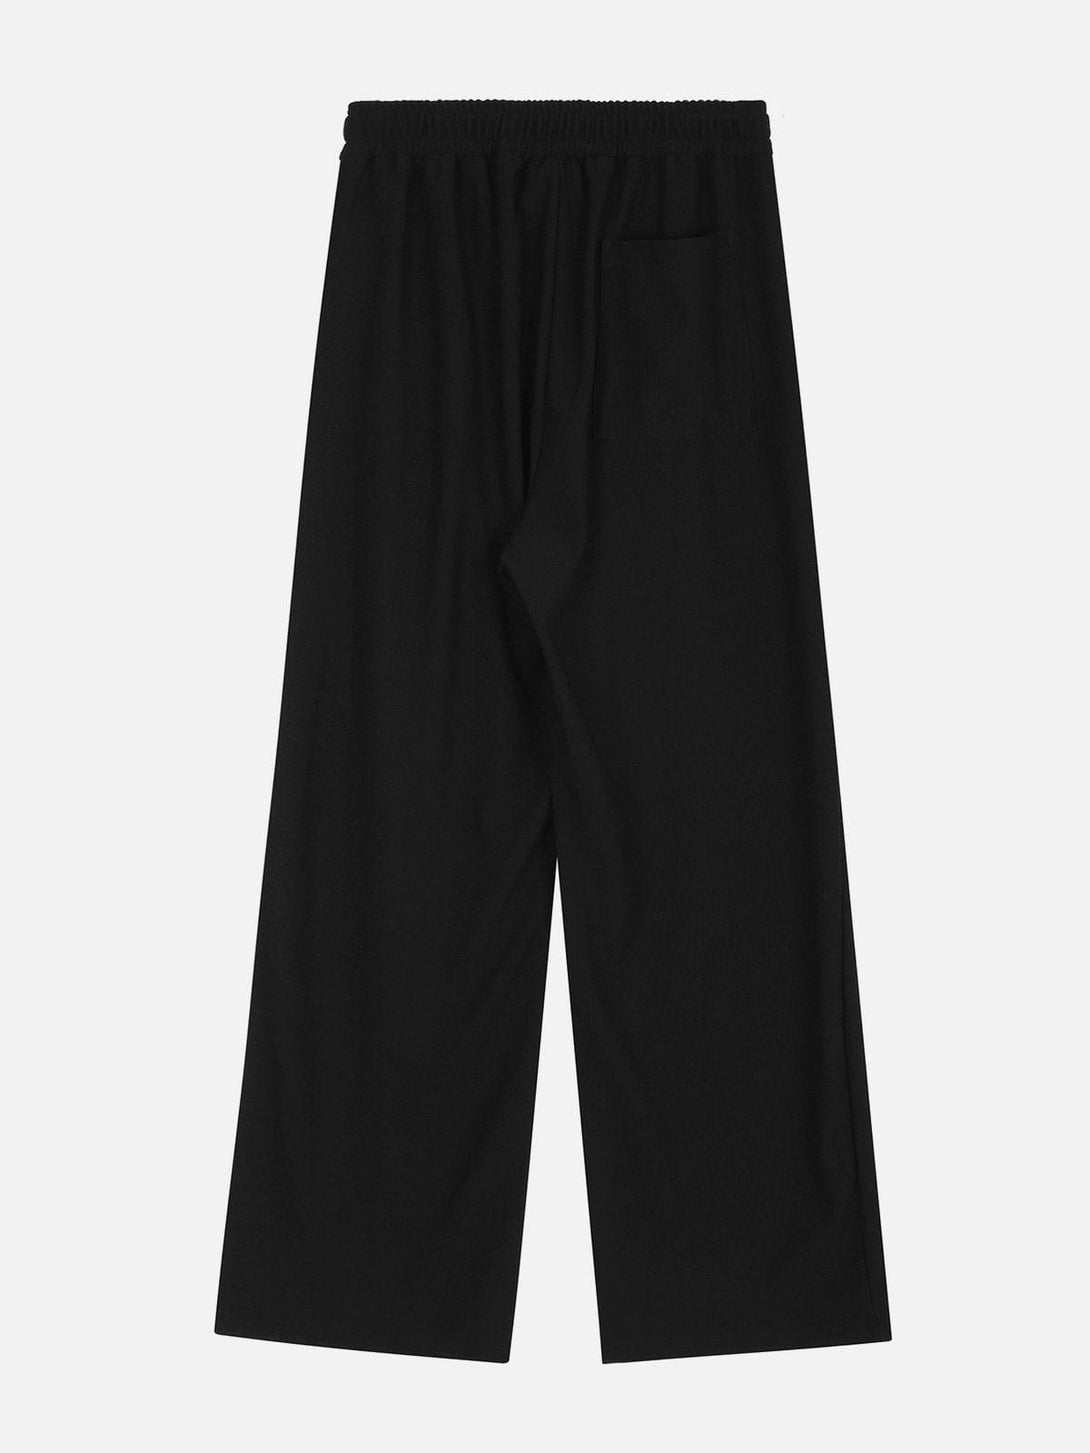 Majesda® - Loose Color Block Pants outfit ideas streetwear fashion